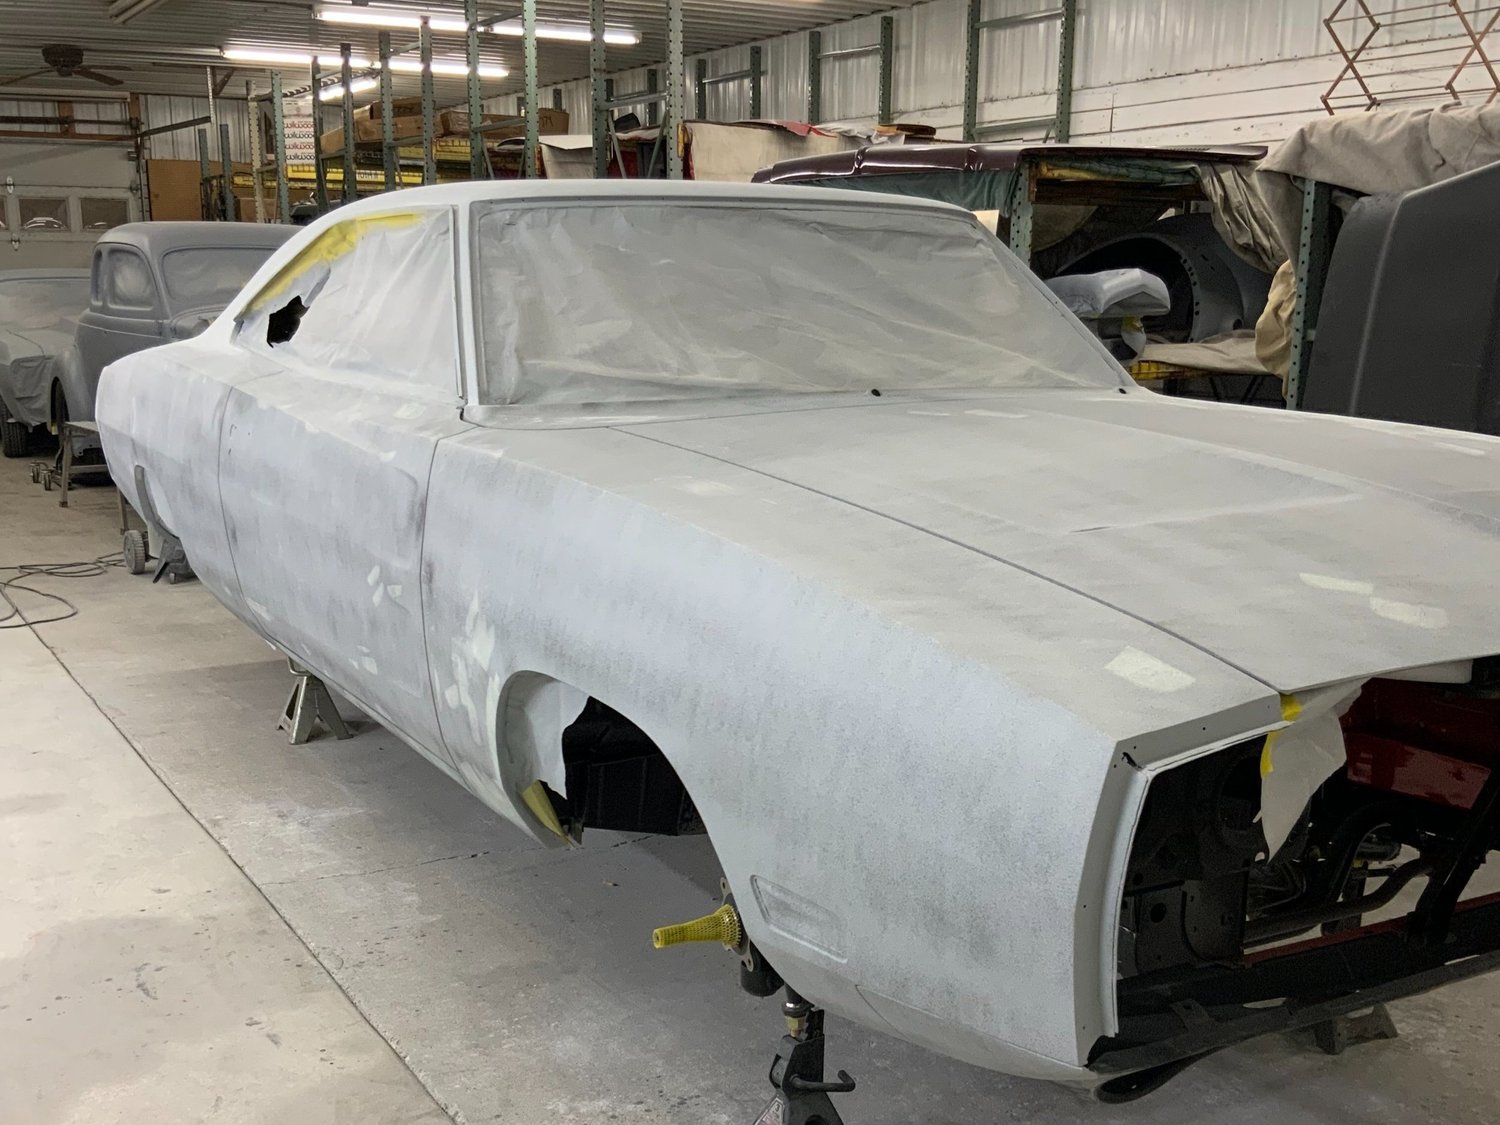 1970-Charger-car-restoration-remodel-body-work-hot-rod-factory-Minneapolis(8).jpg